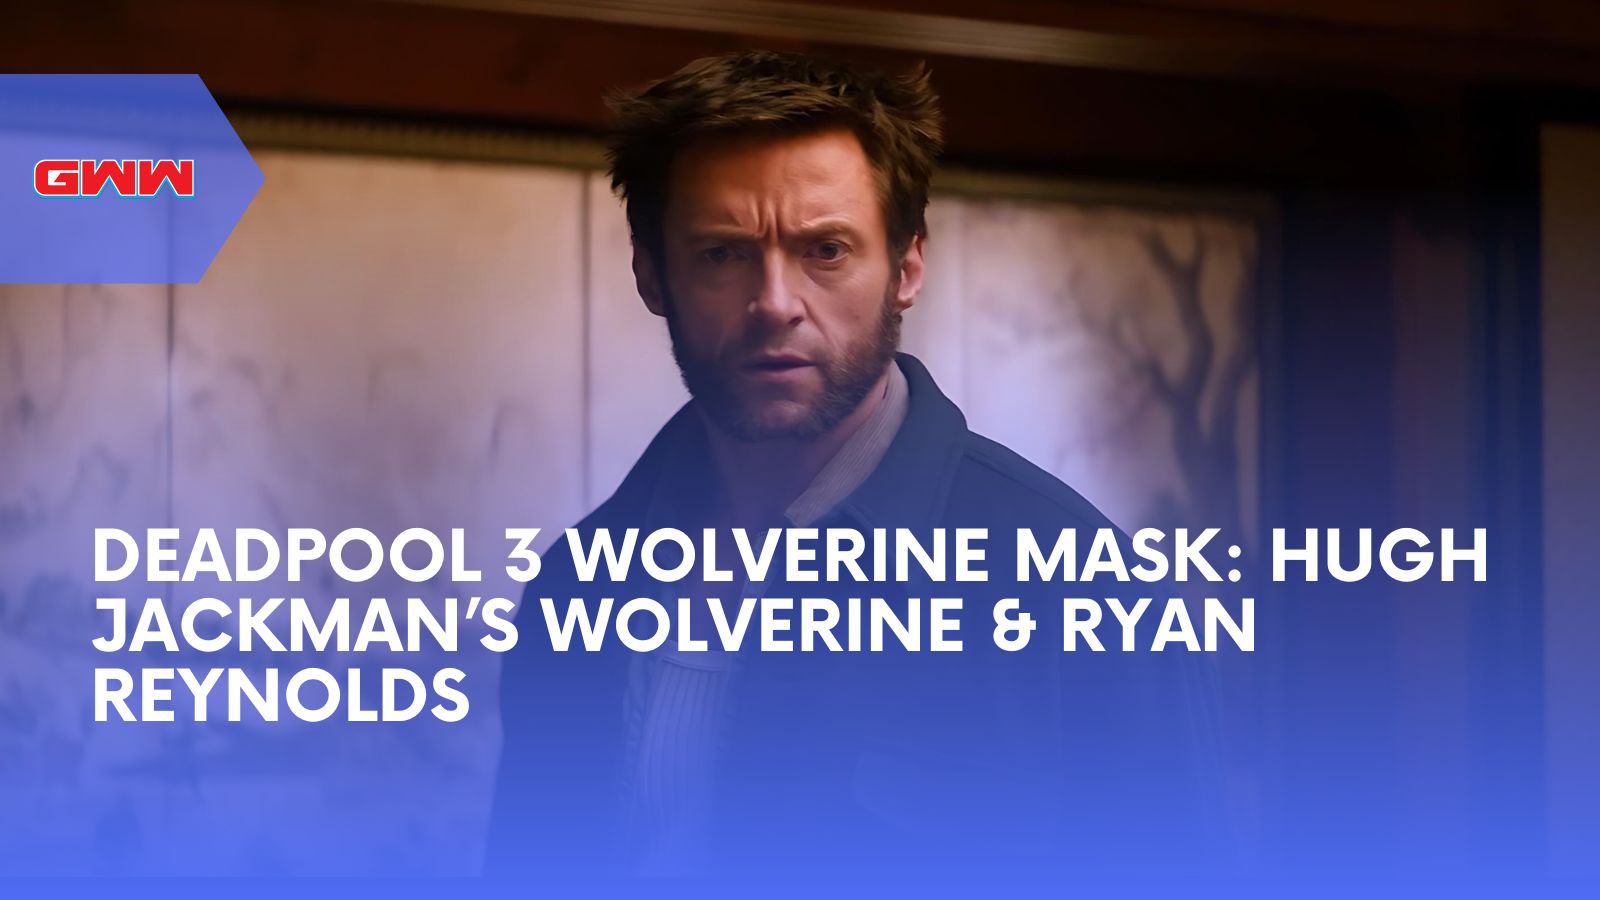 Deadpool 3 Wolverine Mask: Hugh Jackman’s & Ryan Reynolds